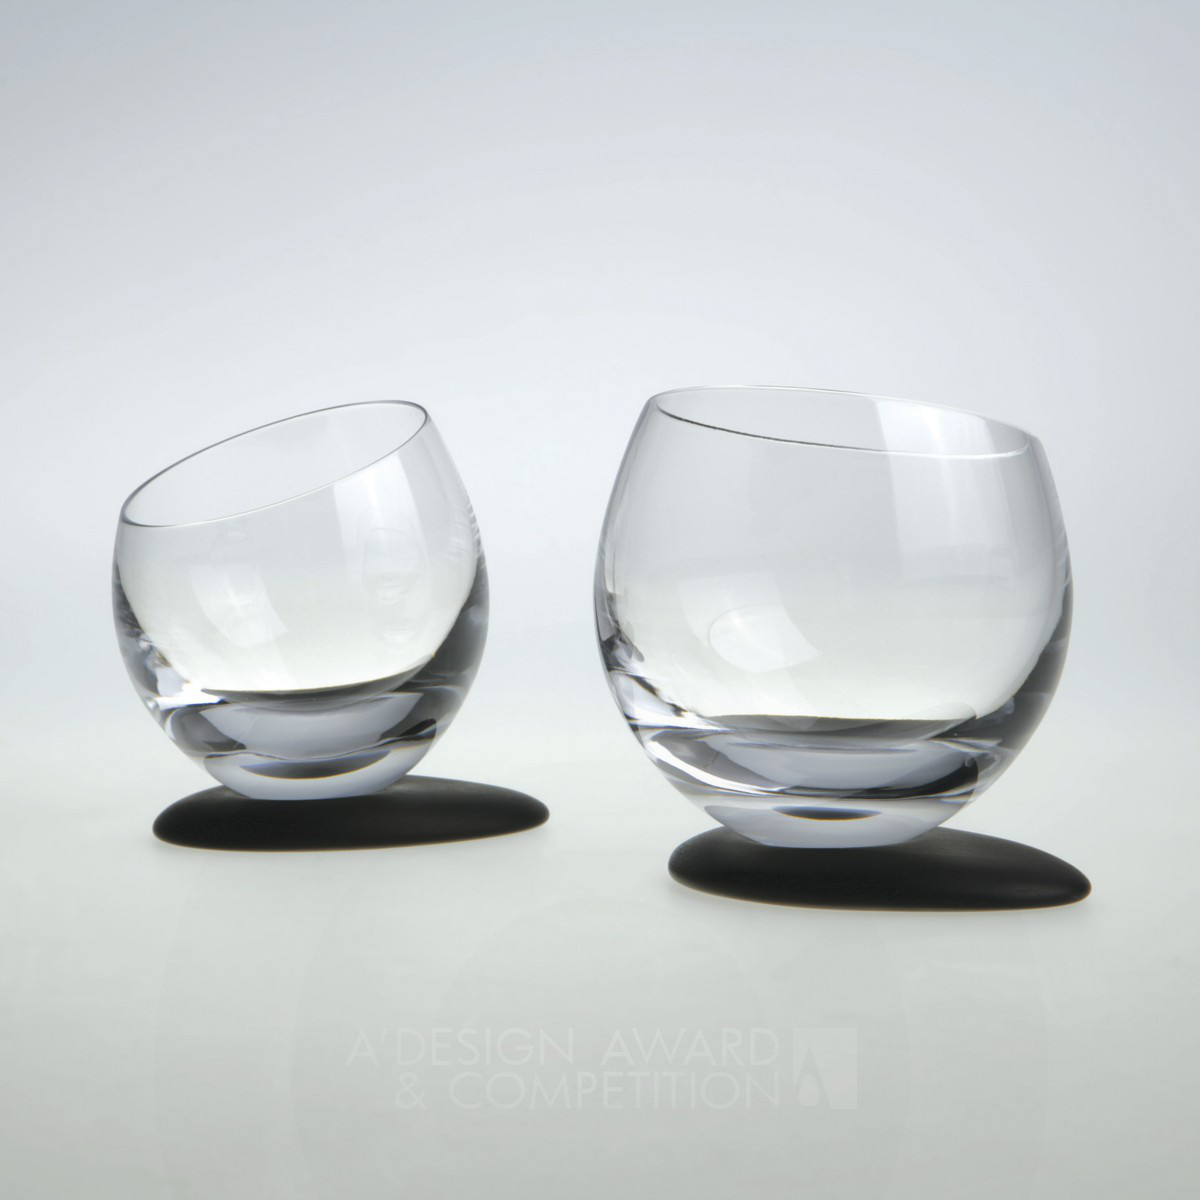 Primeval Expressions Water and Spirit Glasses by Mateja Krasovec Pogorelcnik